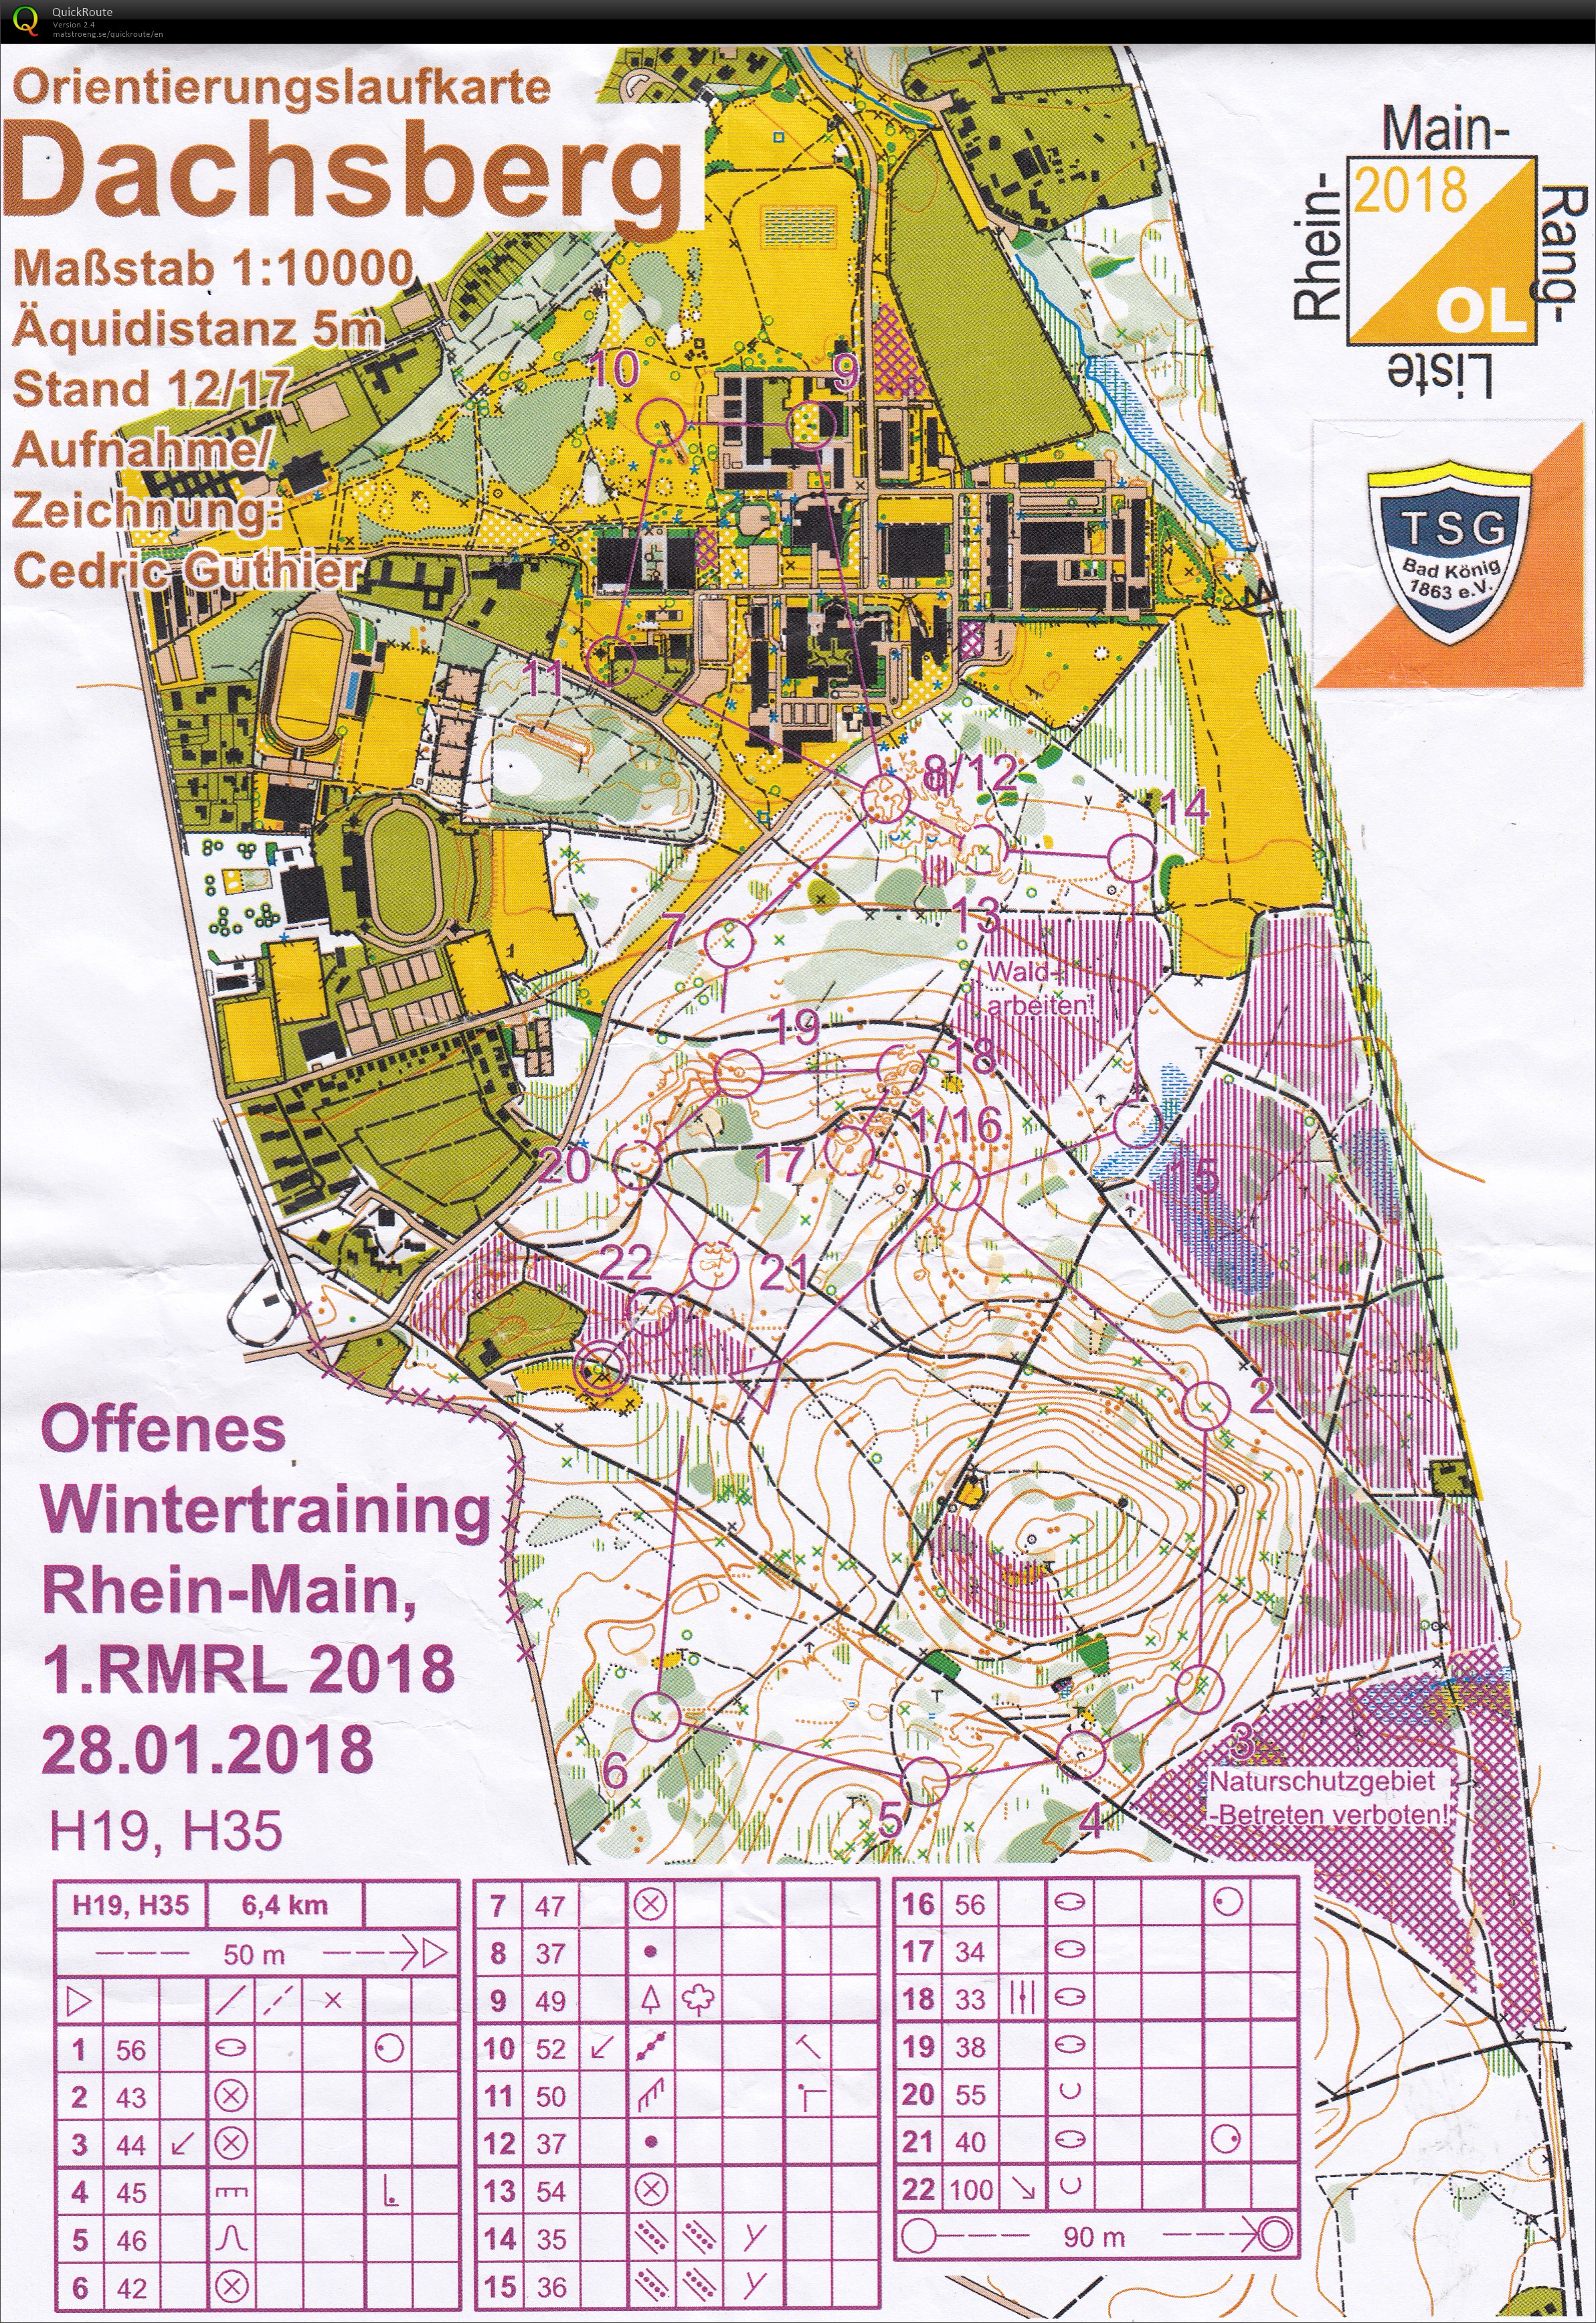 Open winter training / Rhein-Main ranking event (28-01-2018)